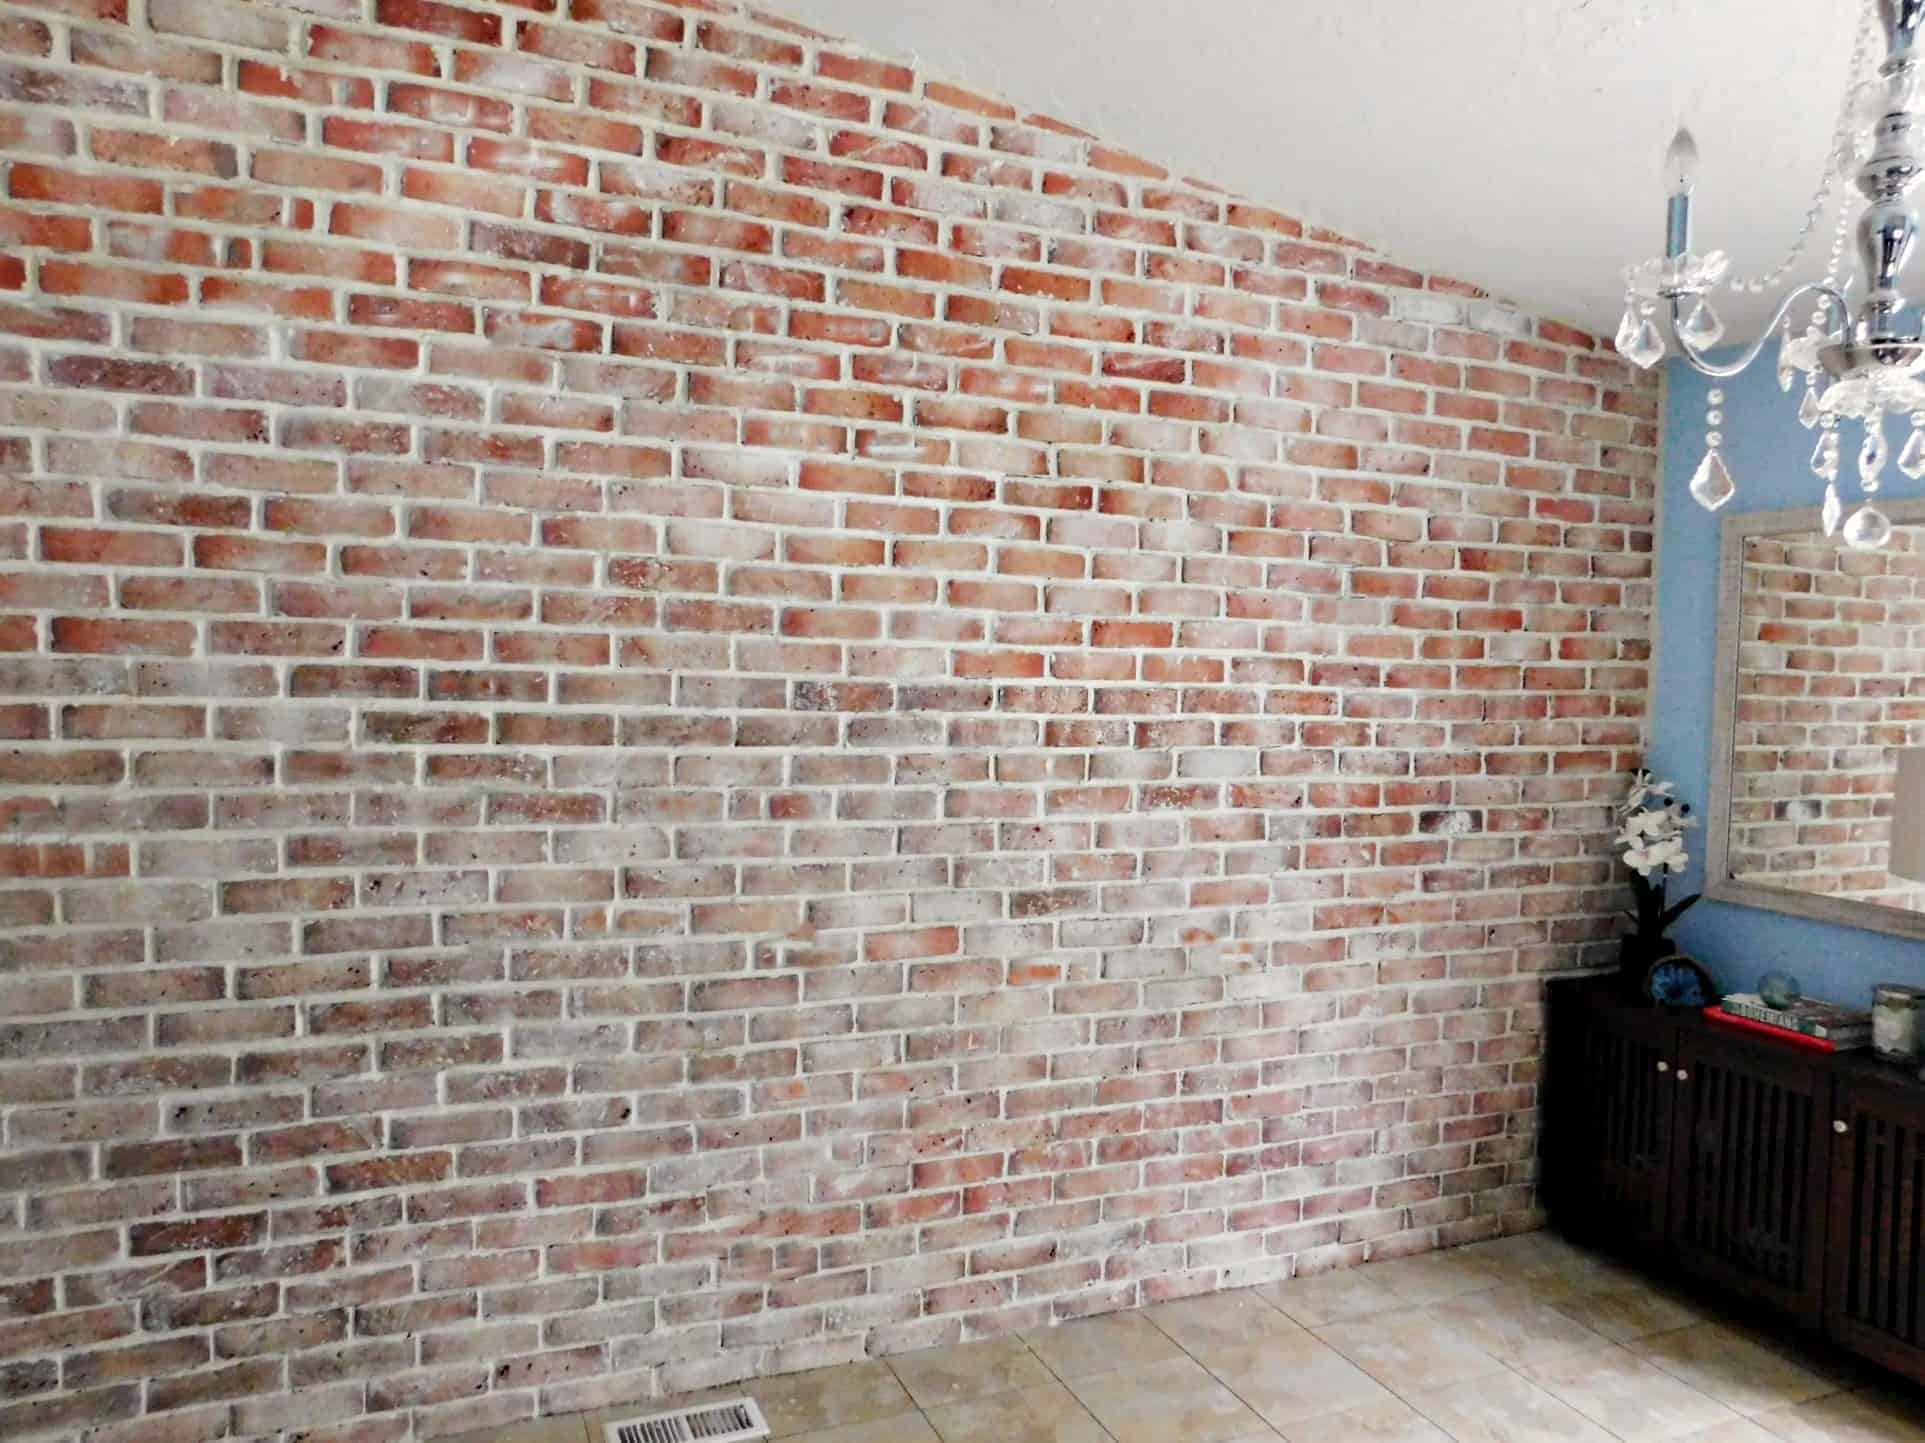 DIY Brick Feature Wall